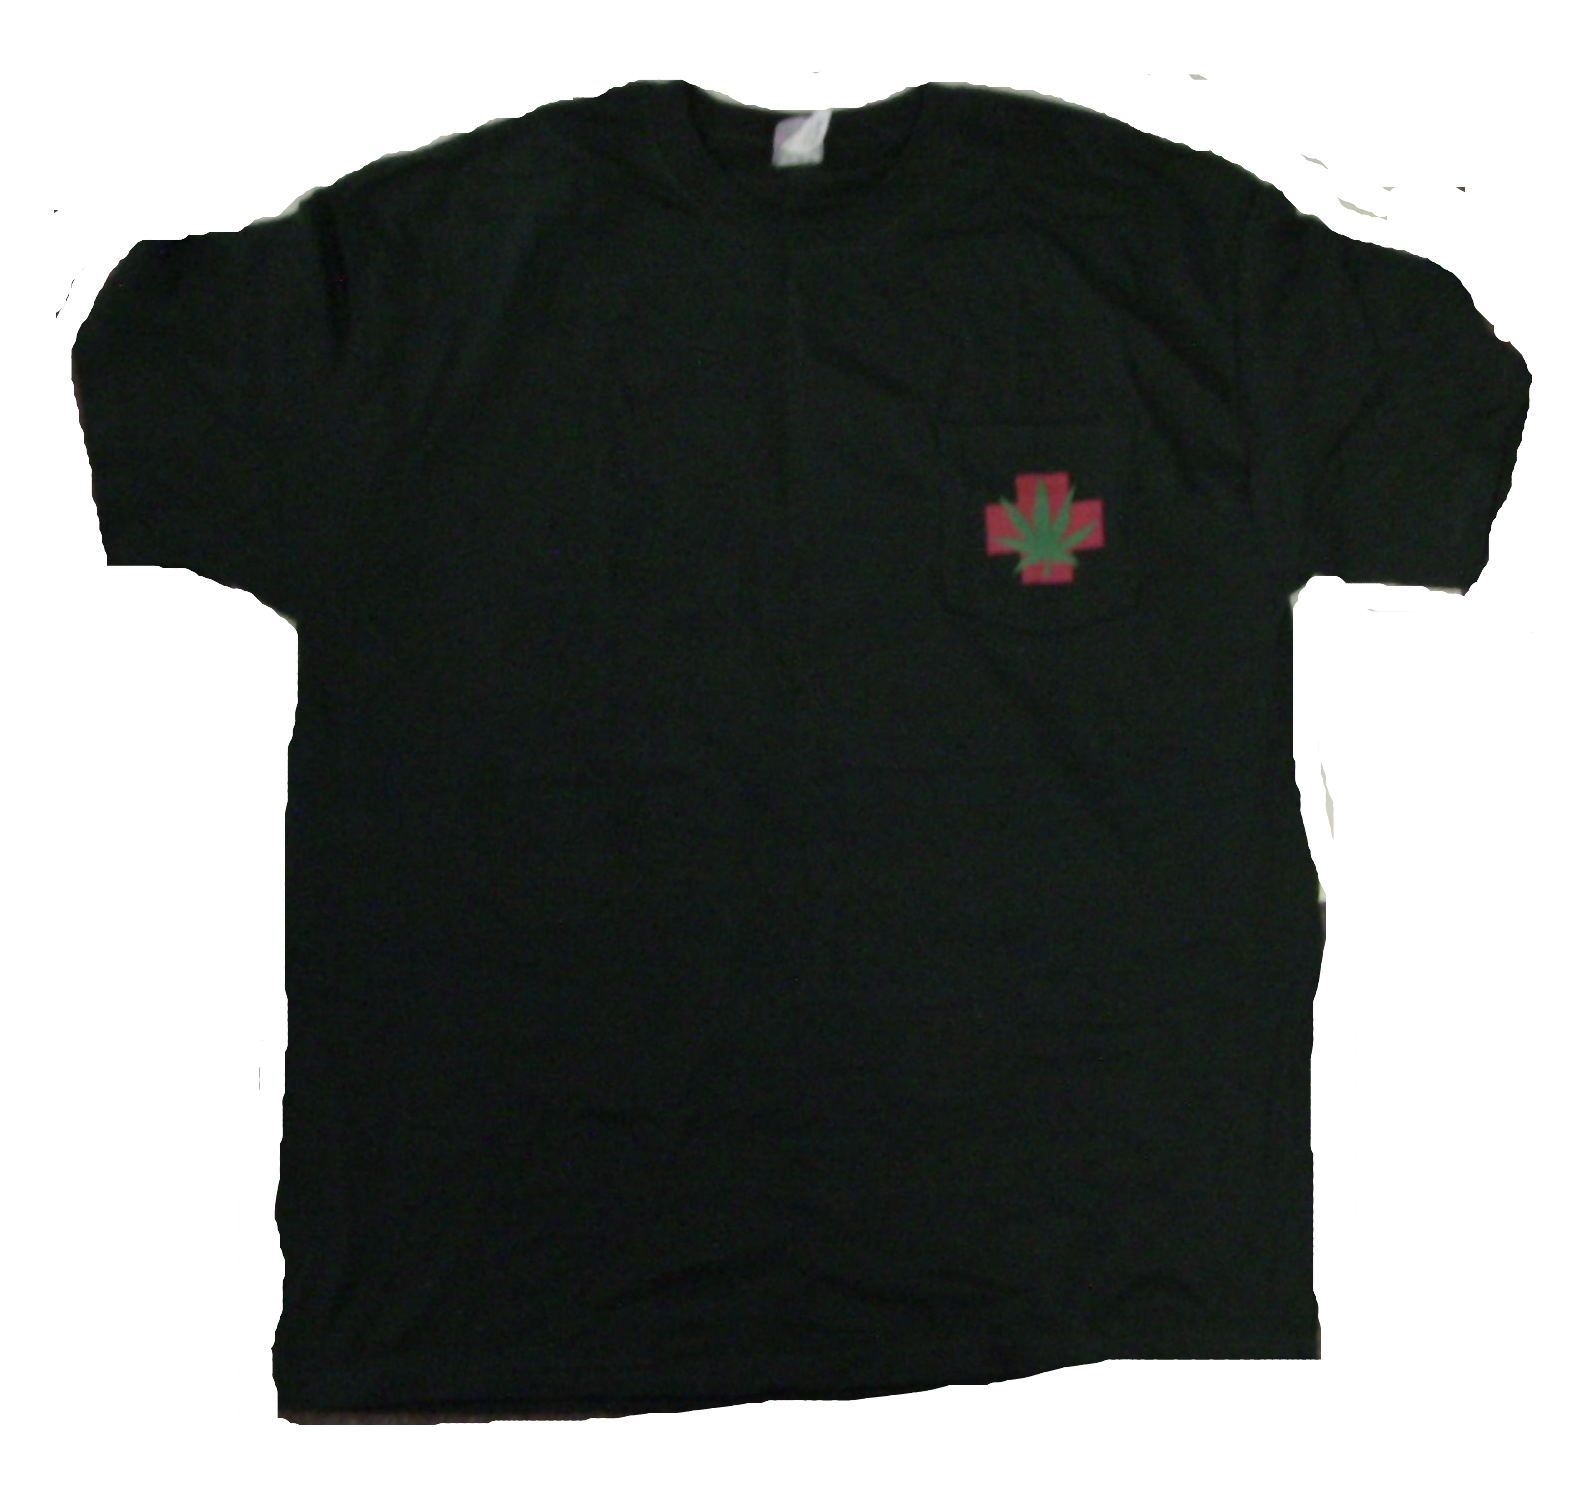 MERCY Tee shirt, Green, Pioneer logo, back 